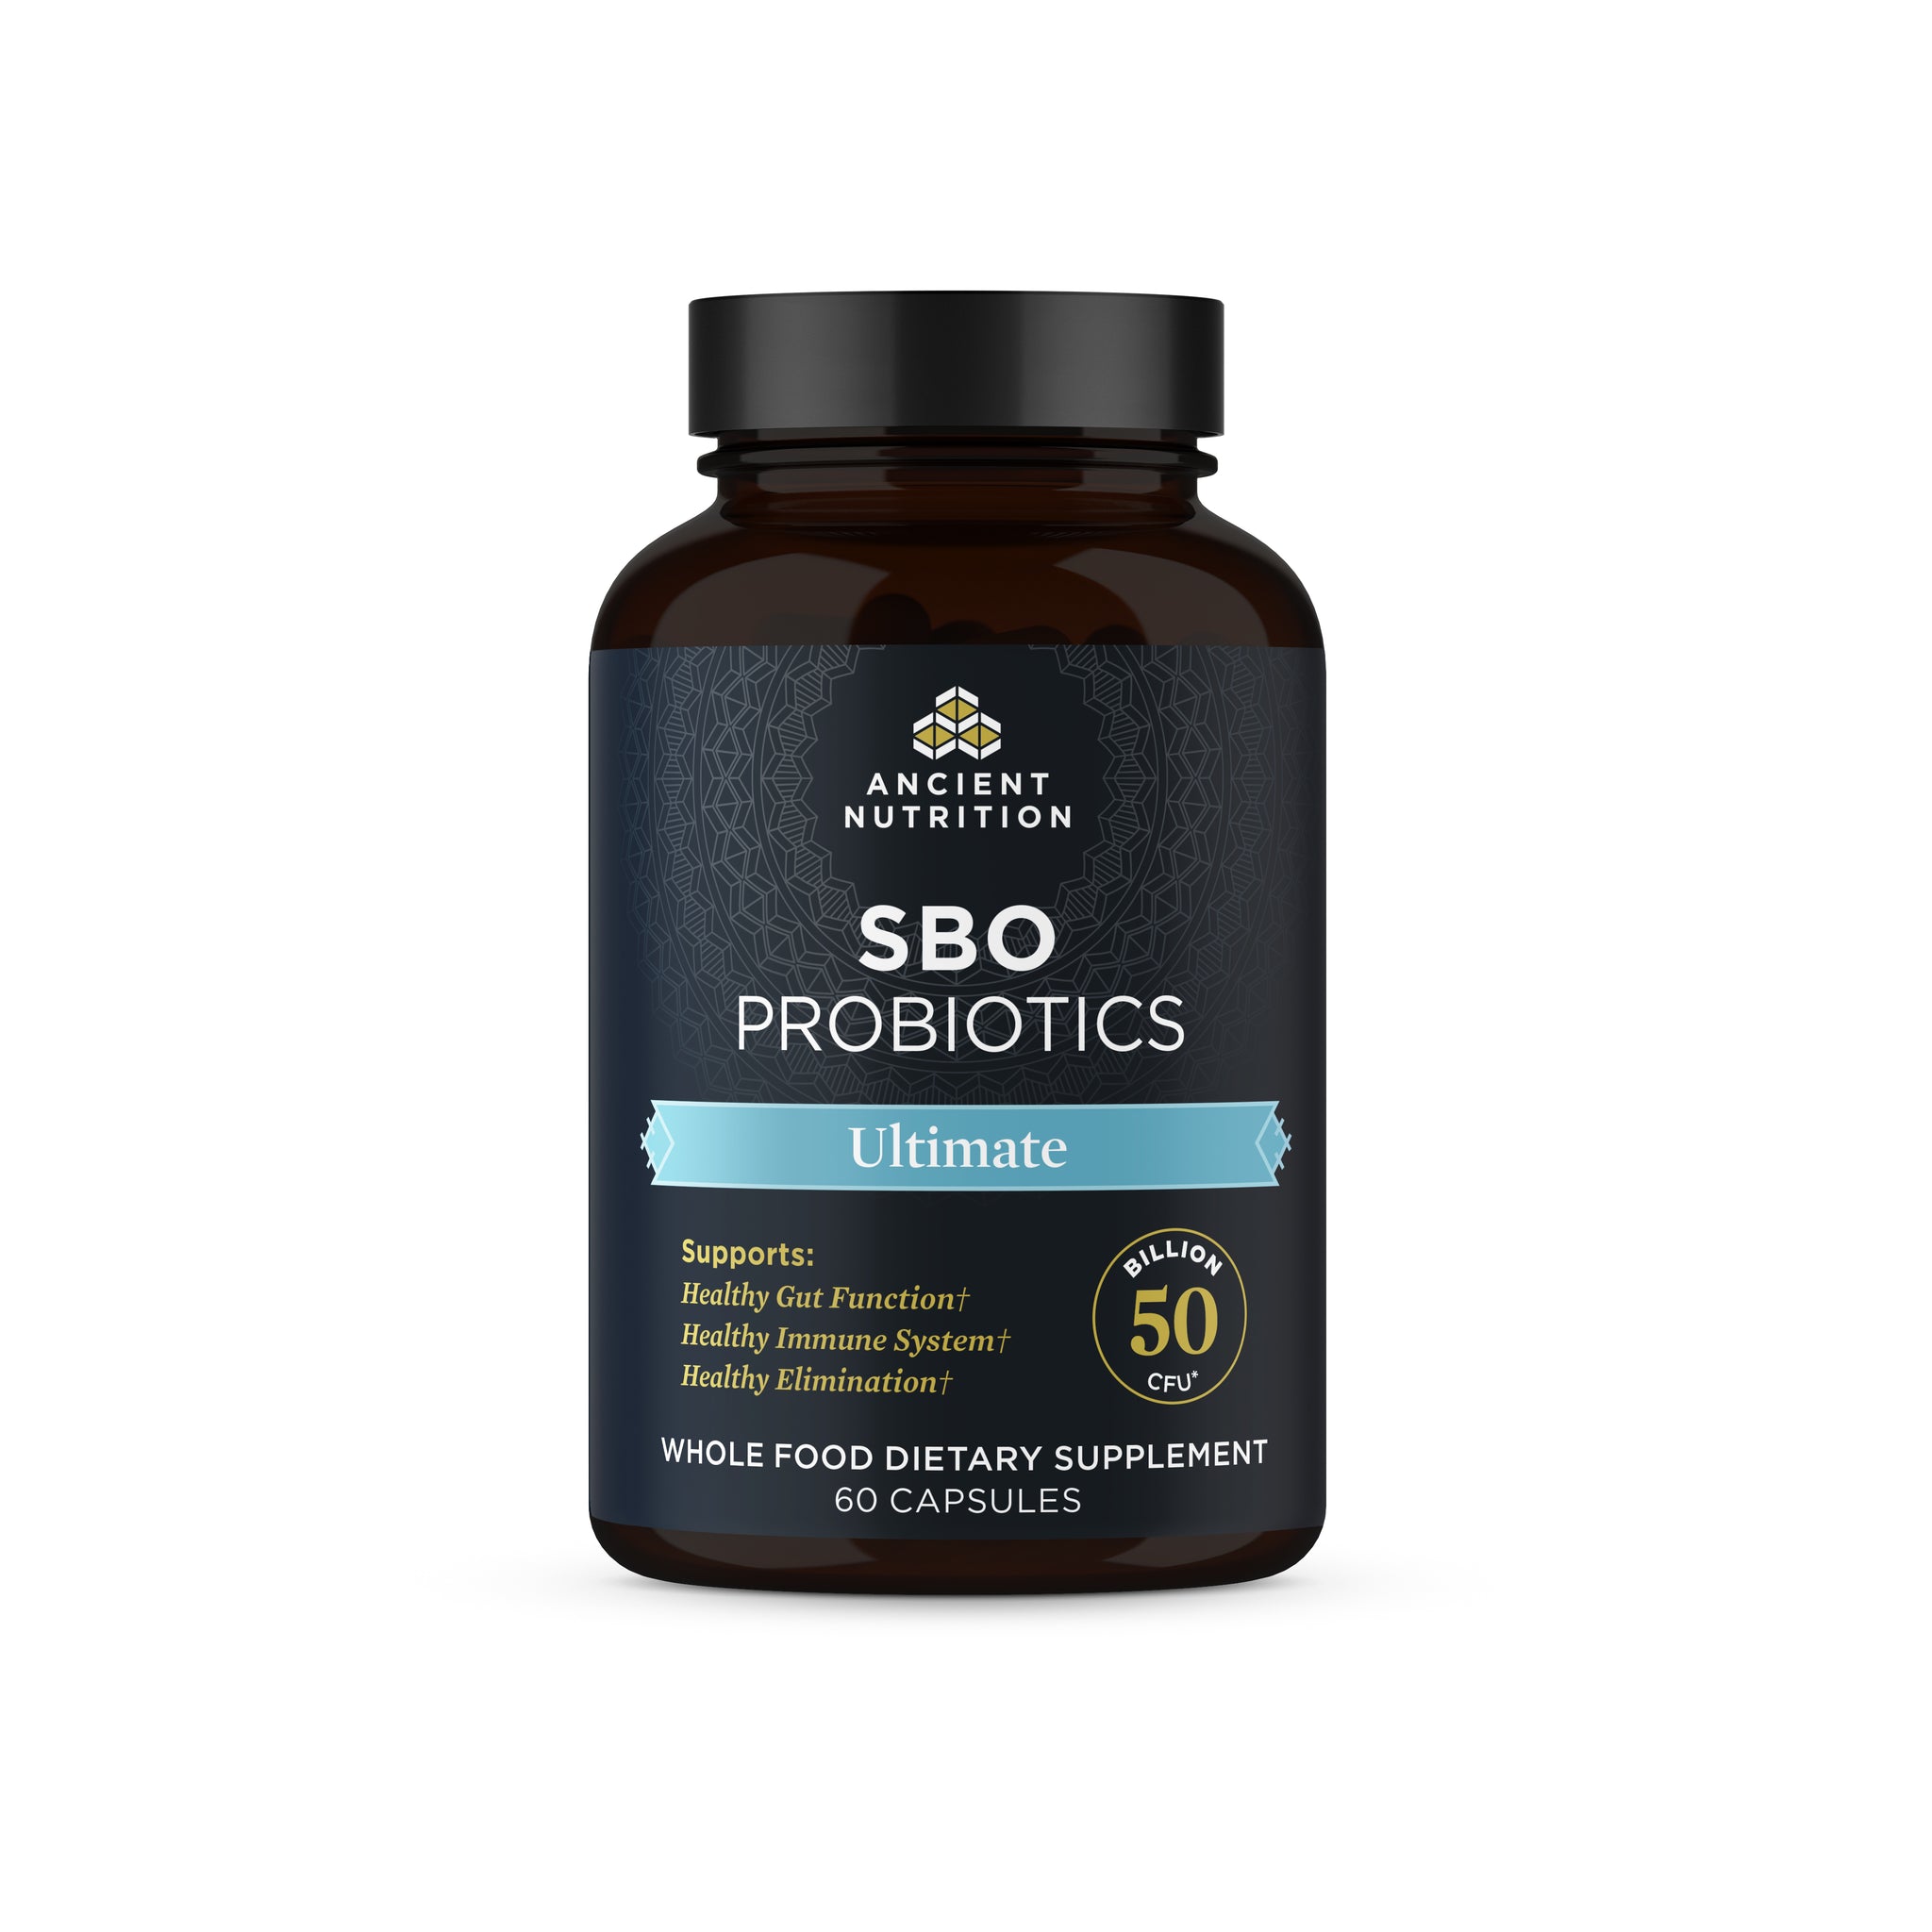 SBO Probiotics Ultimate bottle